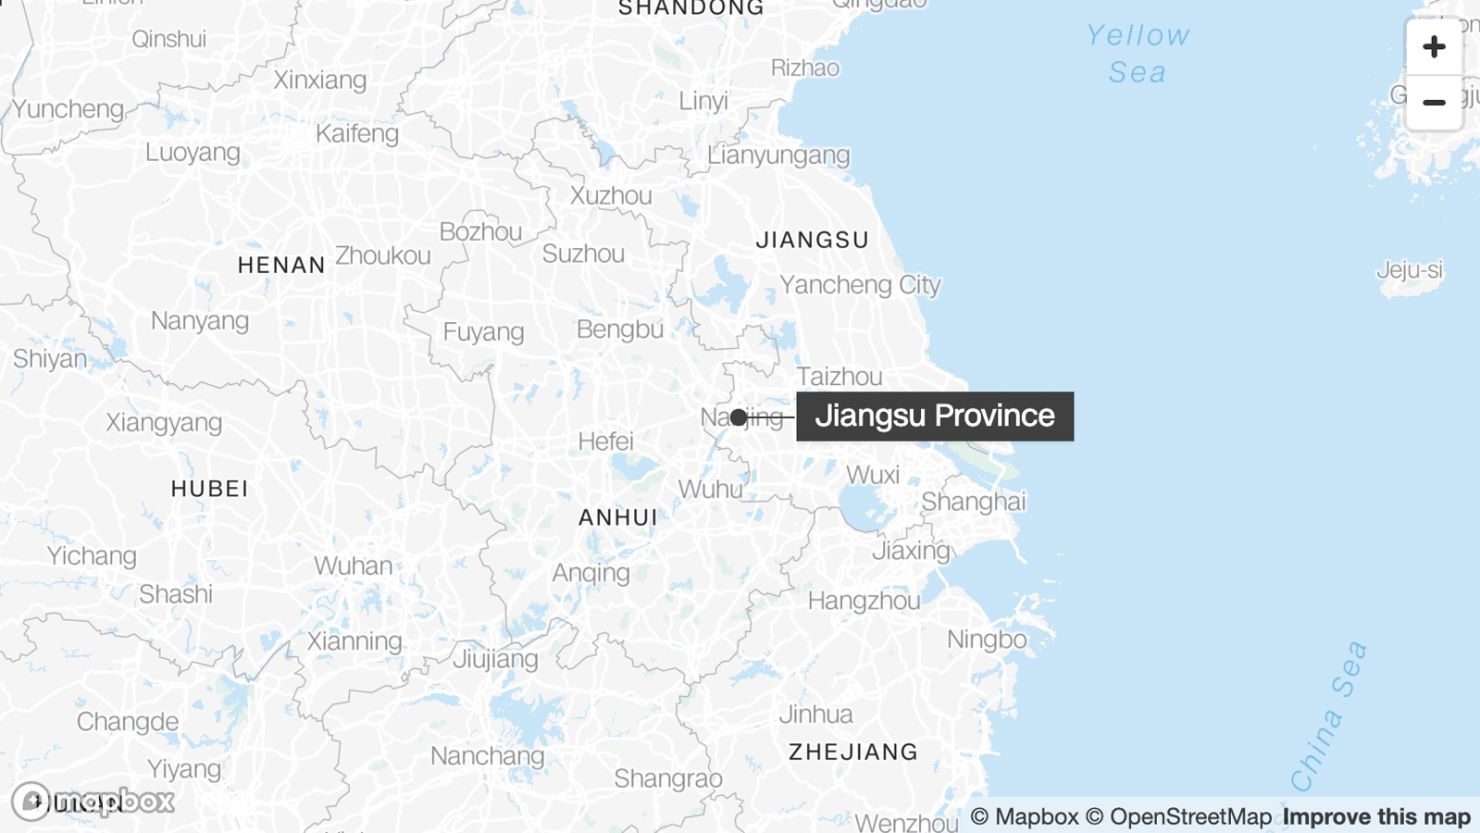 Jiangsu province in China, where the woman was held captive.